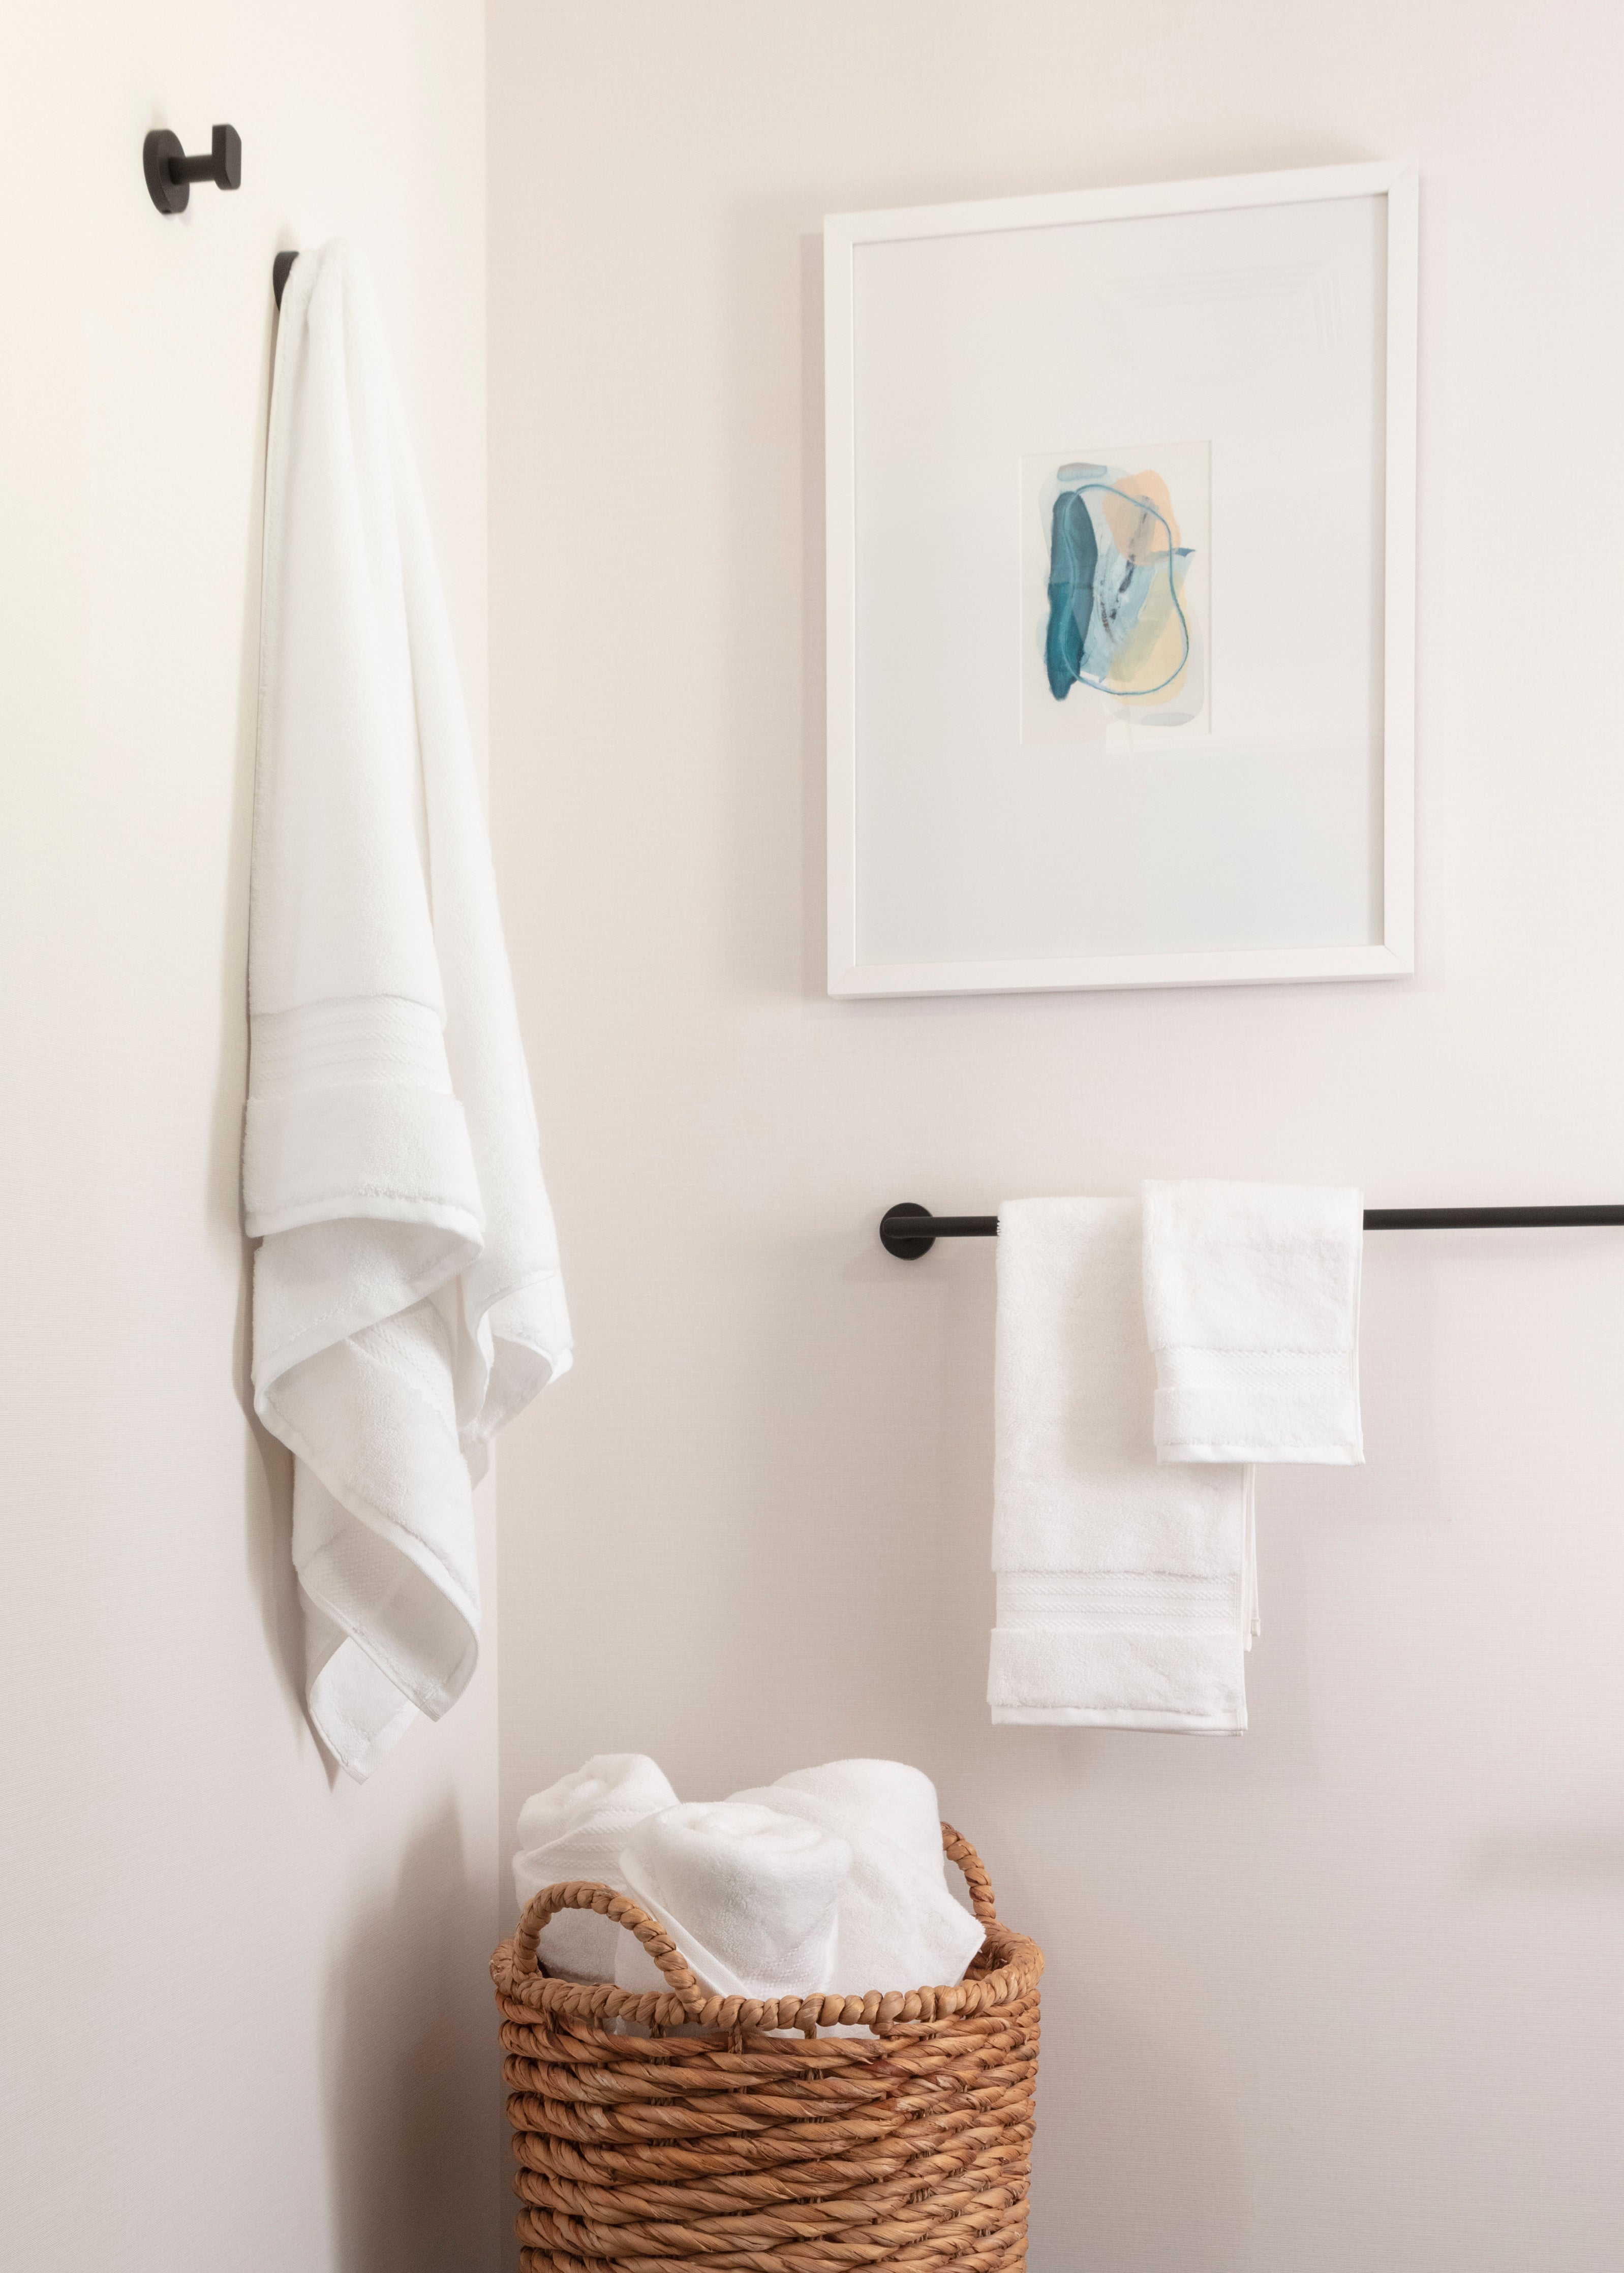 bath towels clearance prime 70 X140CM Towel Bathing Microfiber